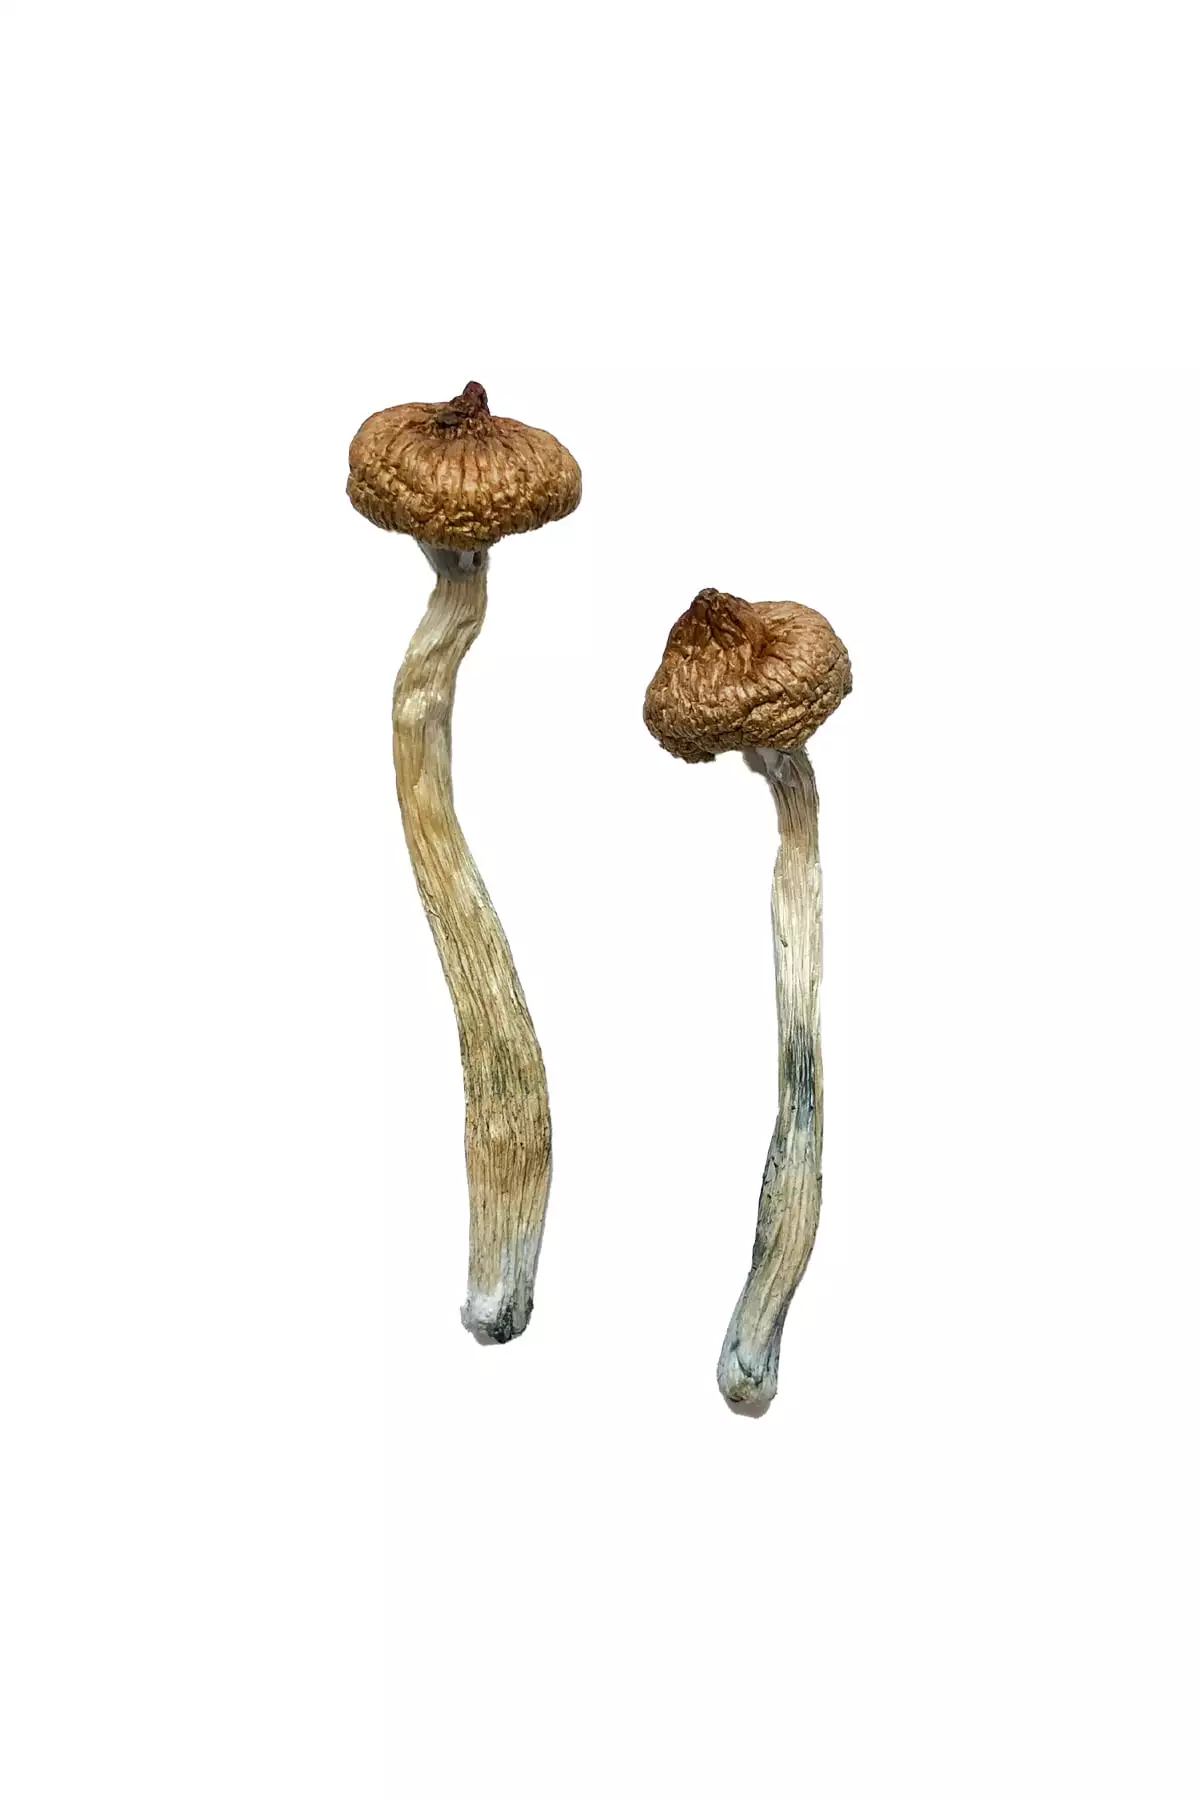 Buy Escondido Magic Mushrooms online